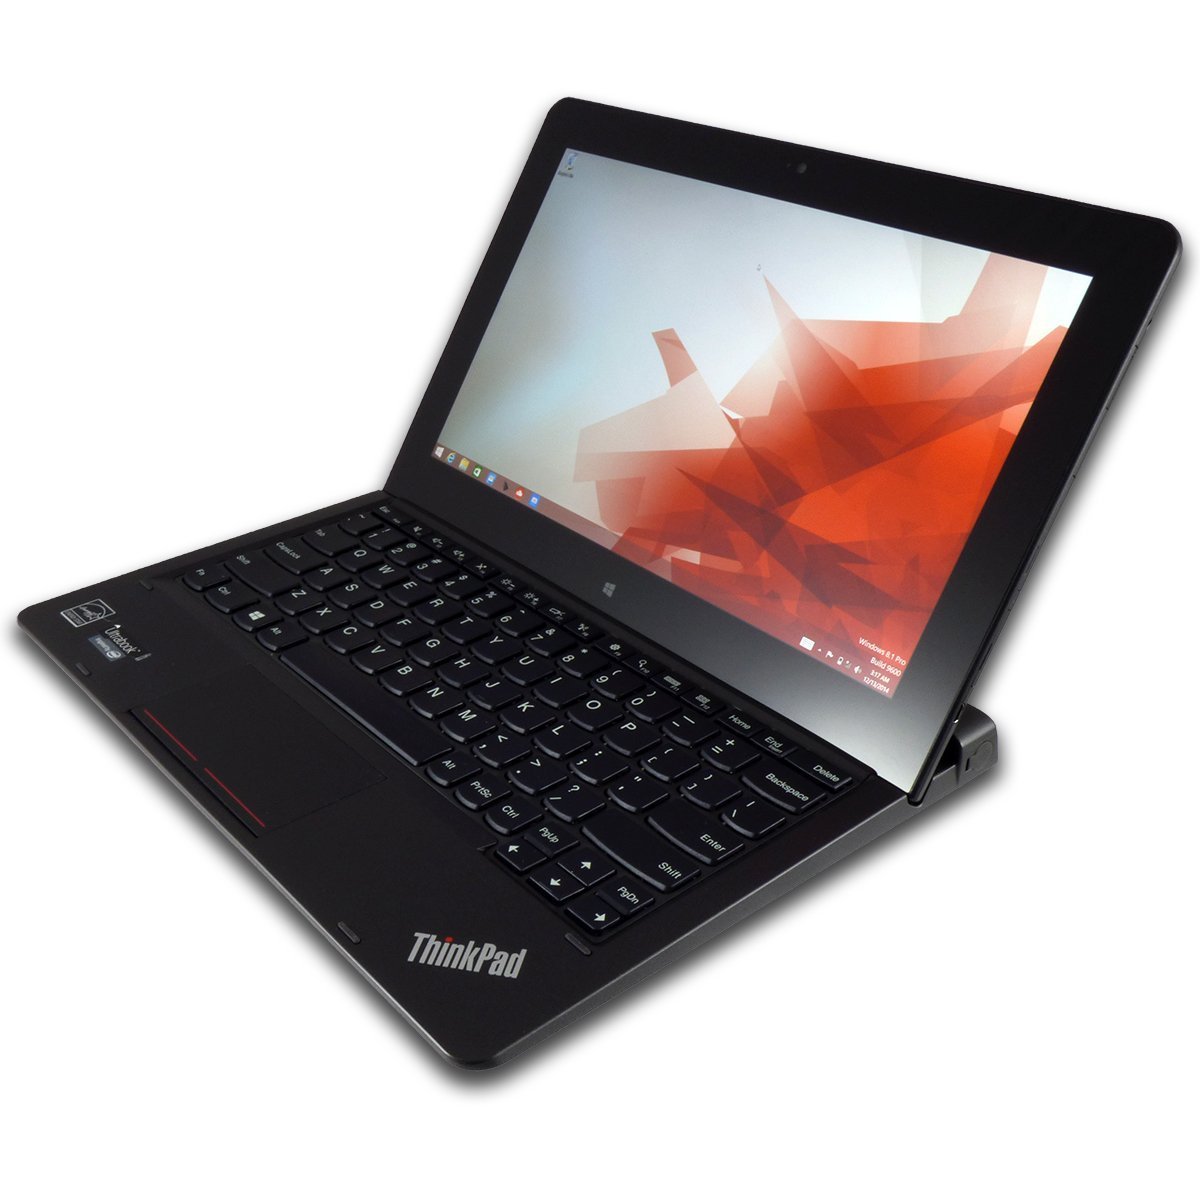 Lenovo ThinkPad Helix Gen 2 (Intel Core M Dual-Core, 128GB SSD, 4GB RAM, 11.6in FHD (1920x1080) Touch Screen, Windows 10) (Renewed)